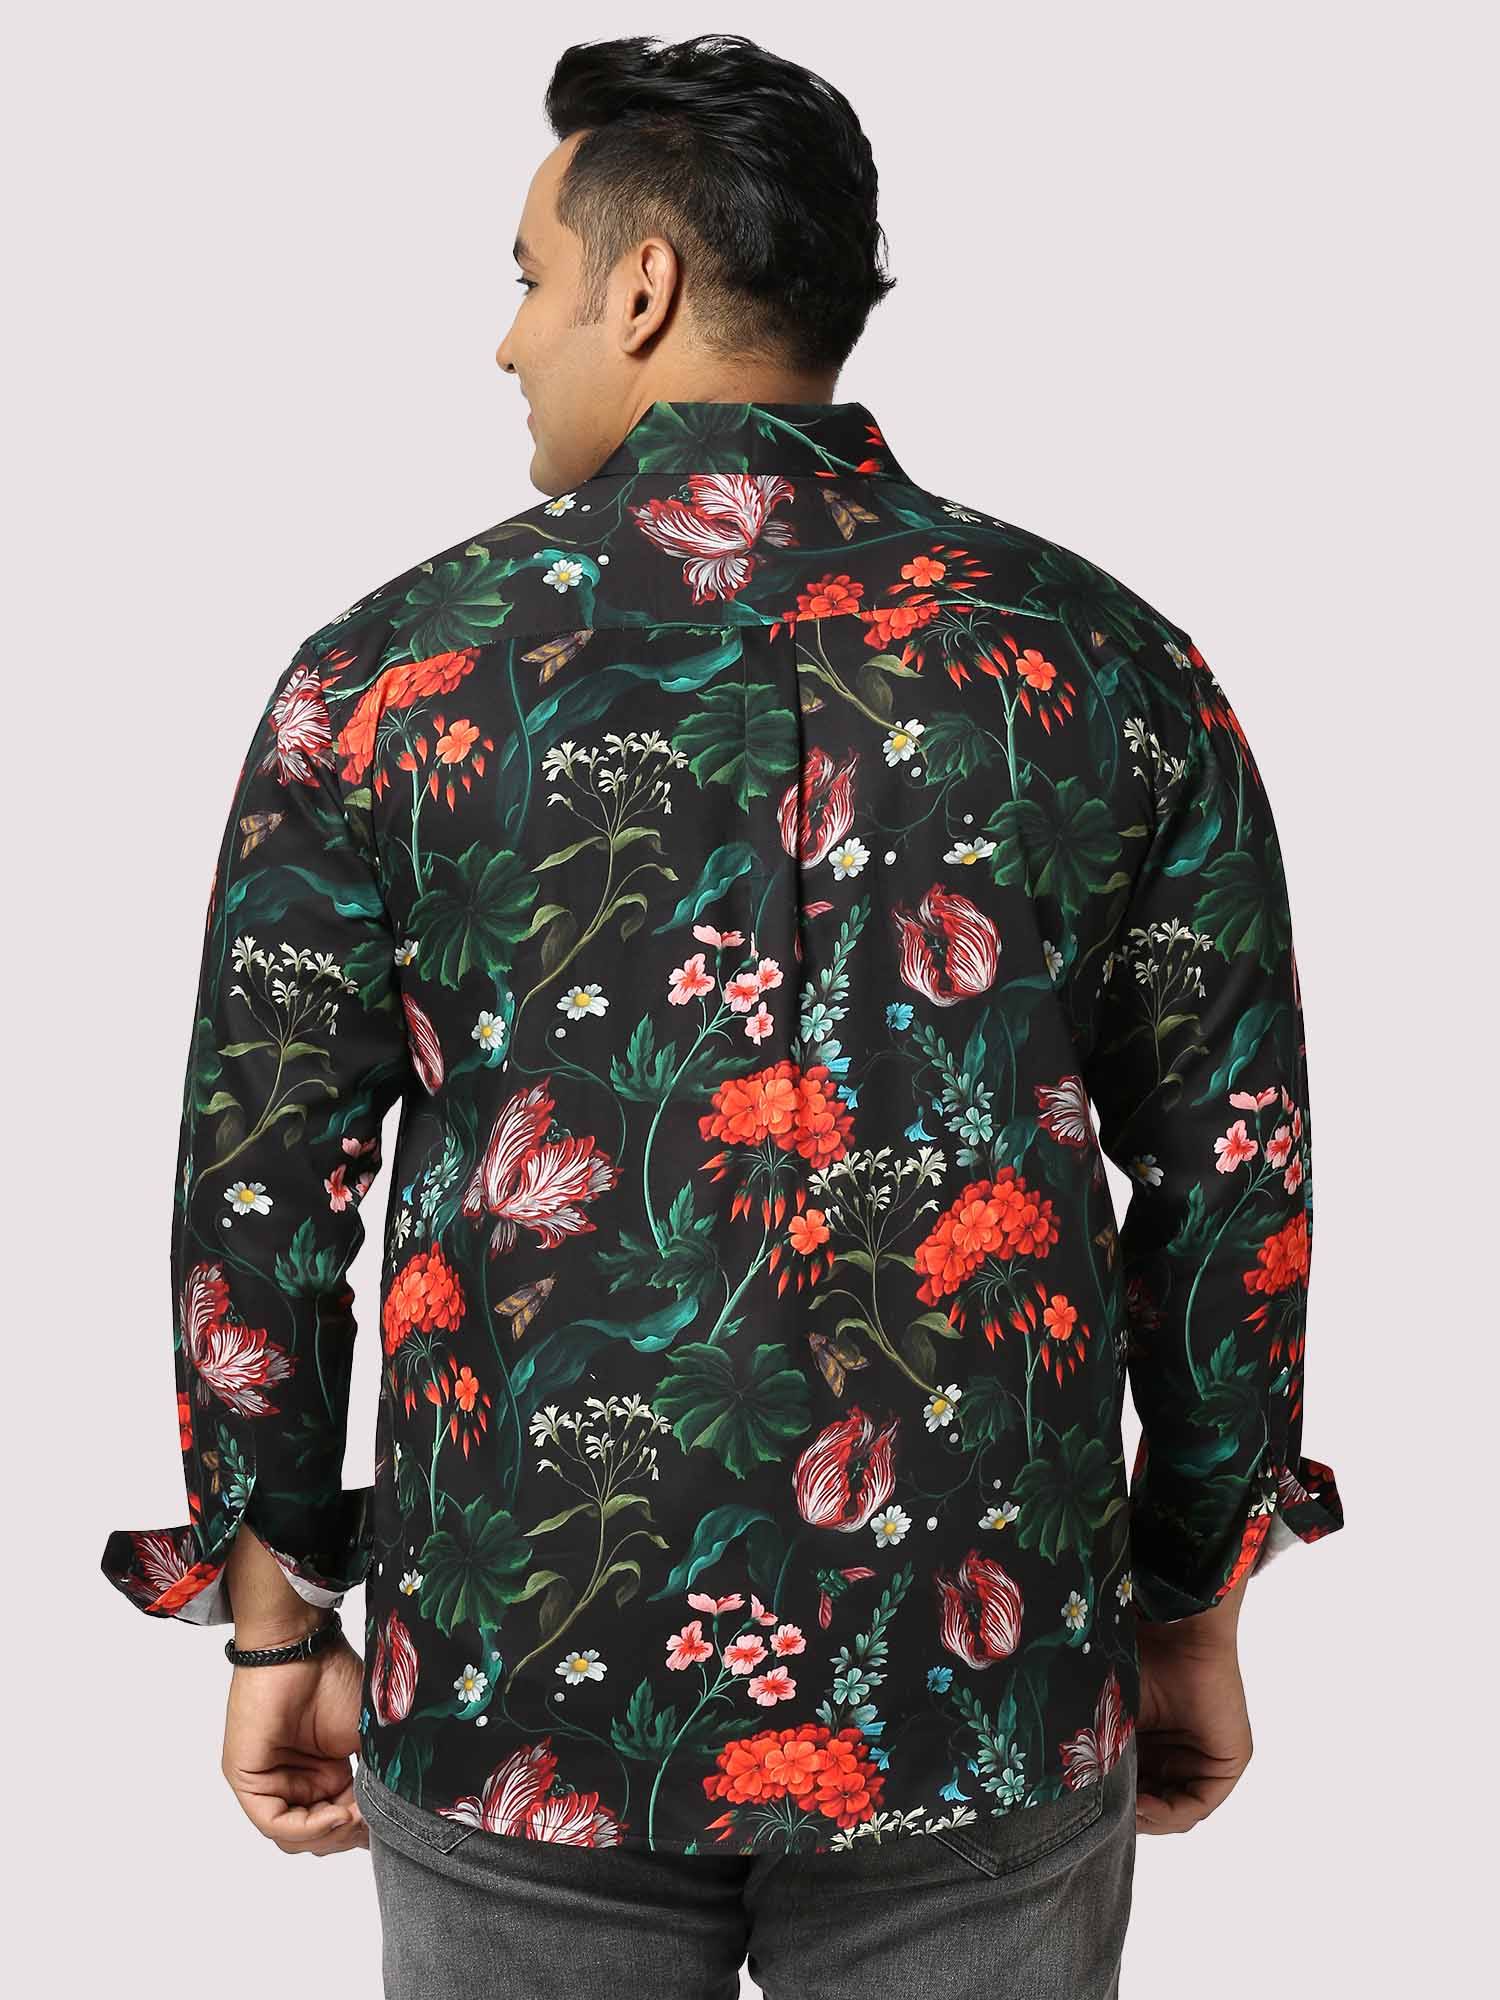 Wild Full Sleeves Digital Printed Shirt - Guniaa Fashions